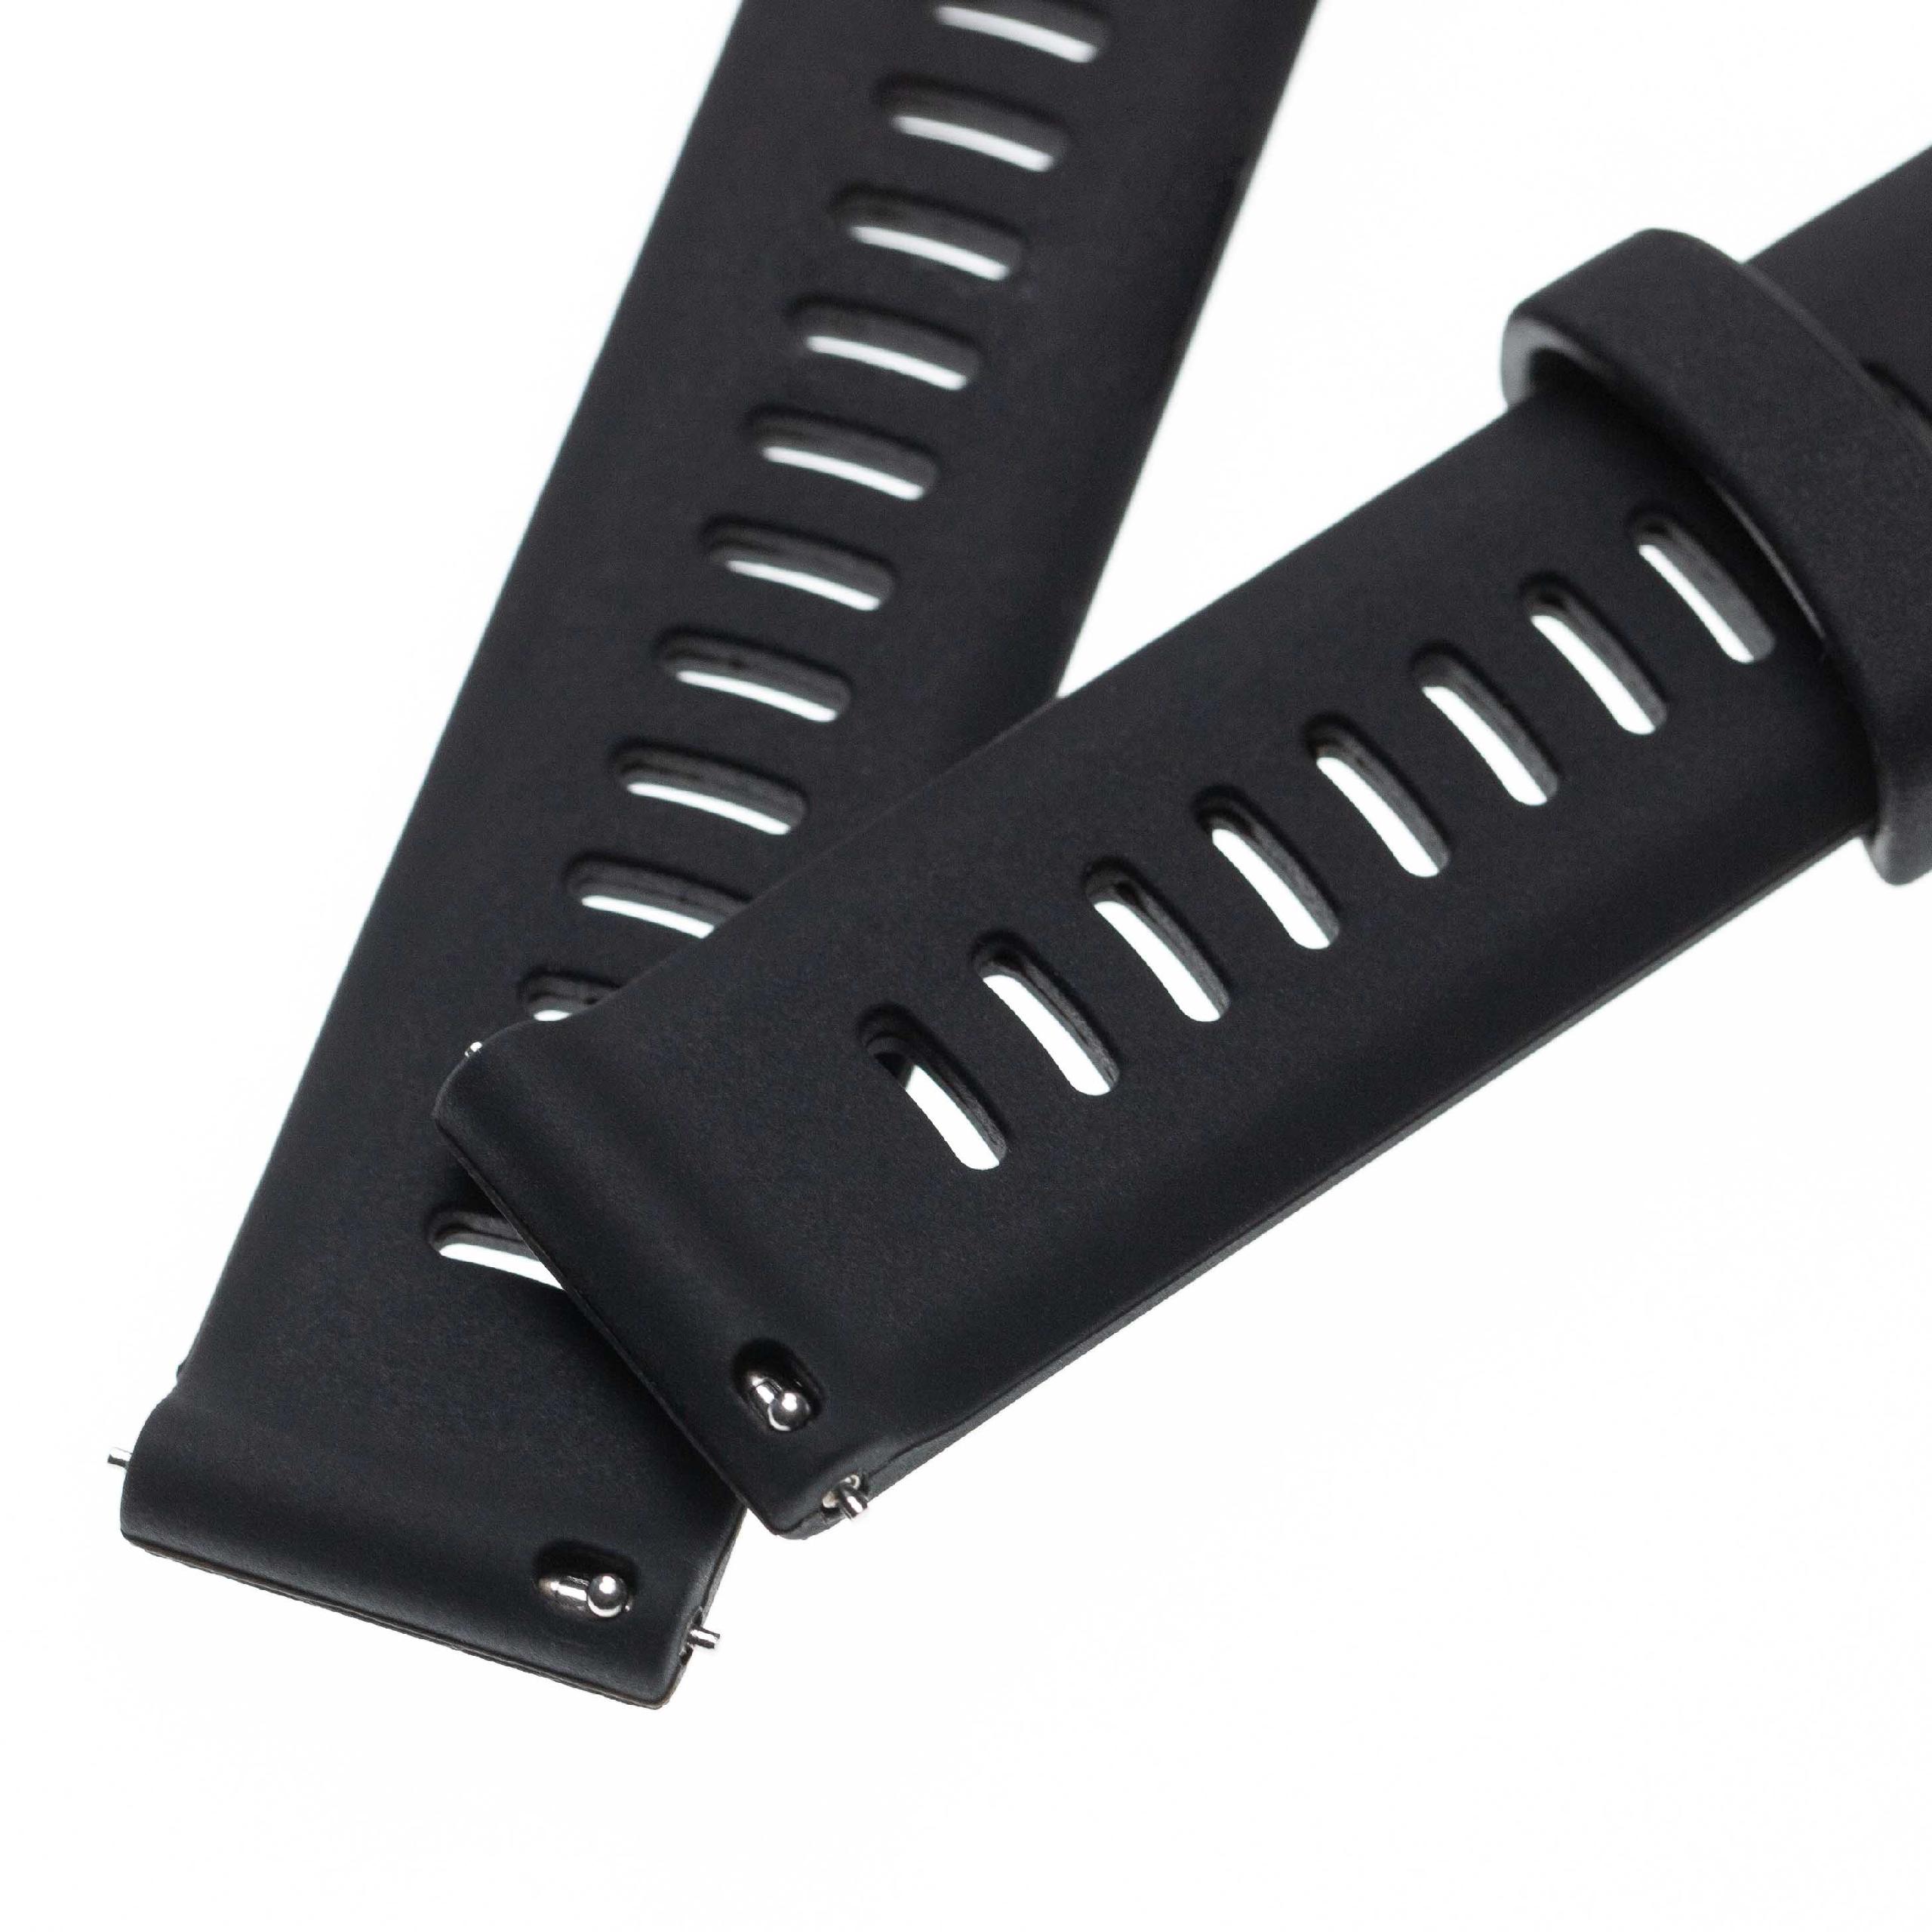 cinturino per Garmin Forerunner Smartwatch - 11 + 8,5 cm lunghezza, silicone, nero